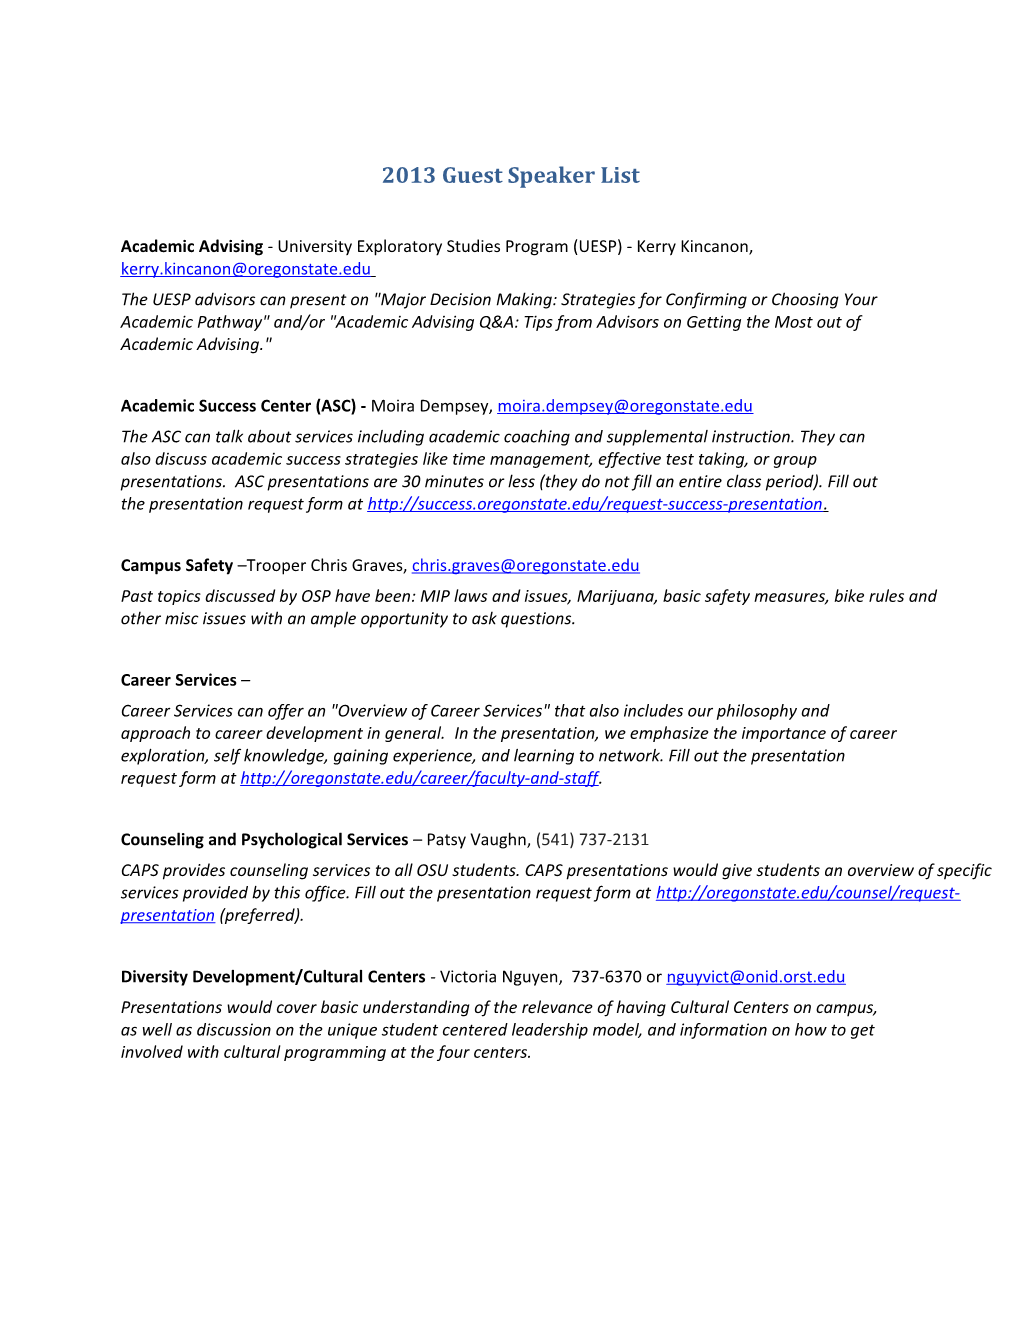 2013Guest Speaker List